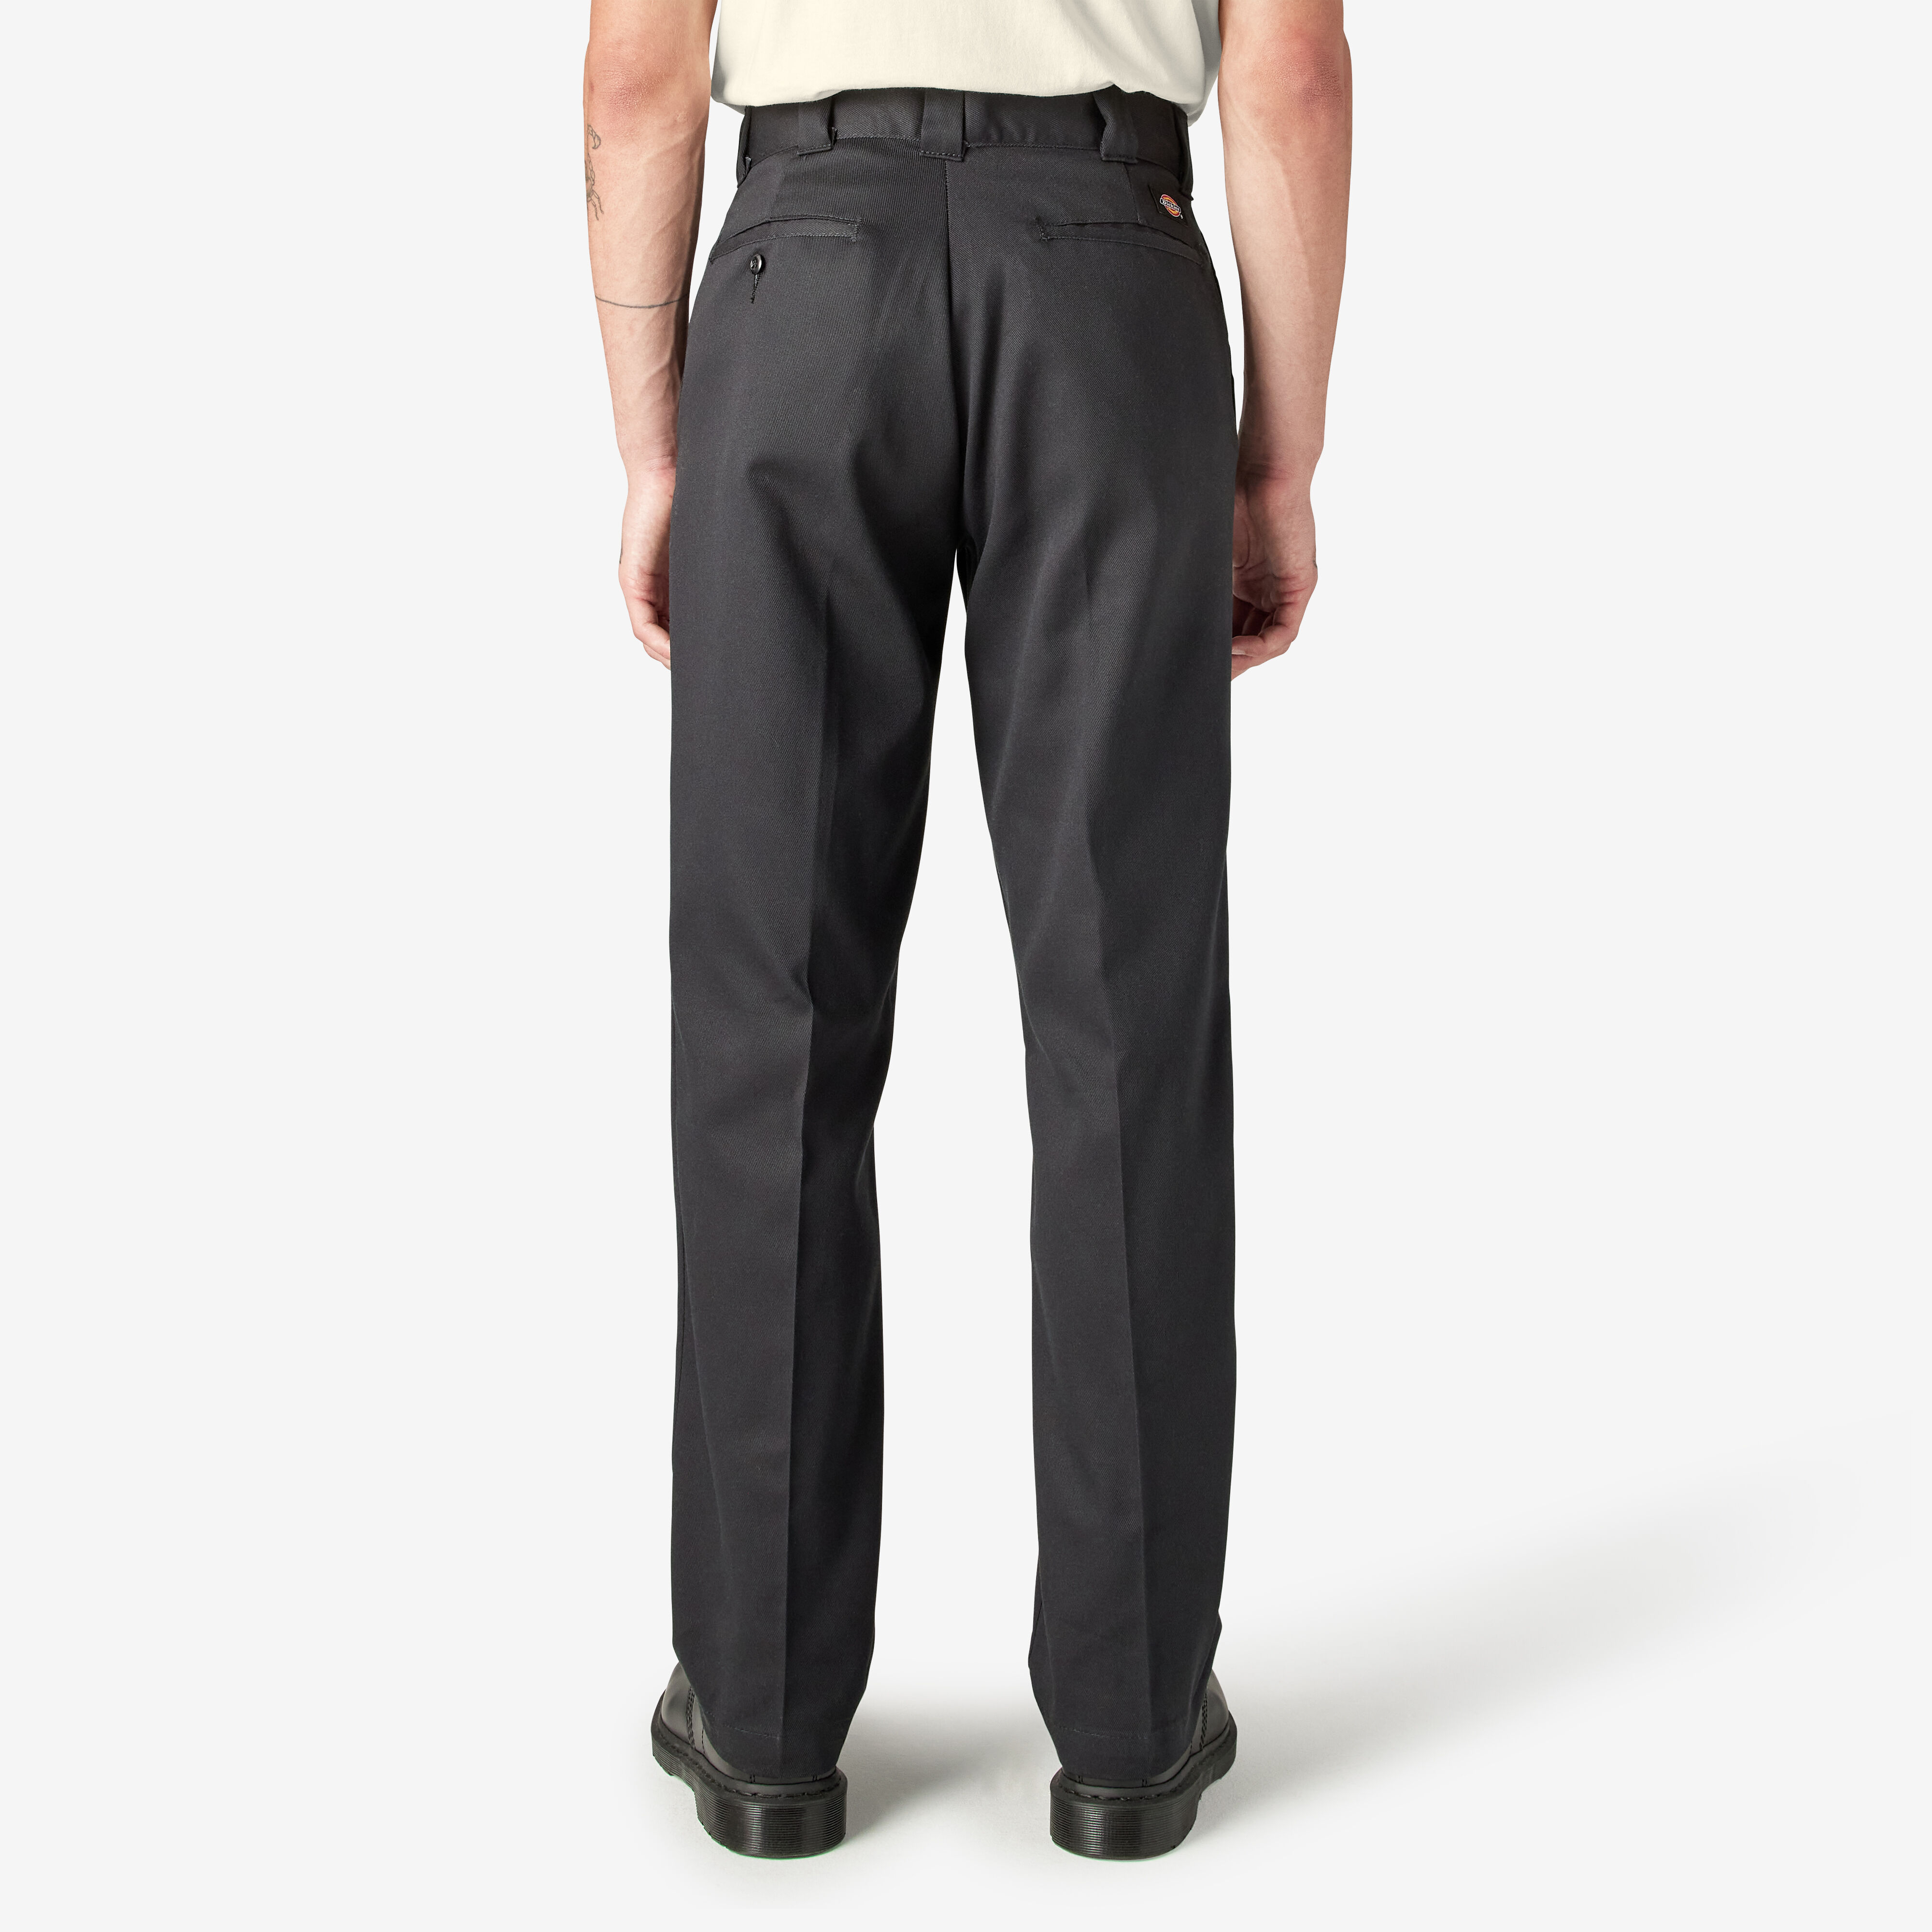 Details about   Dickies Men's Flex Work Pant Regular Straight Fit Choose SZ/color 